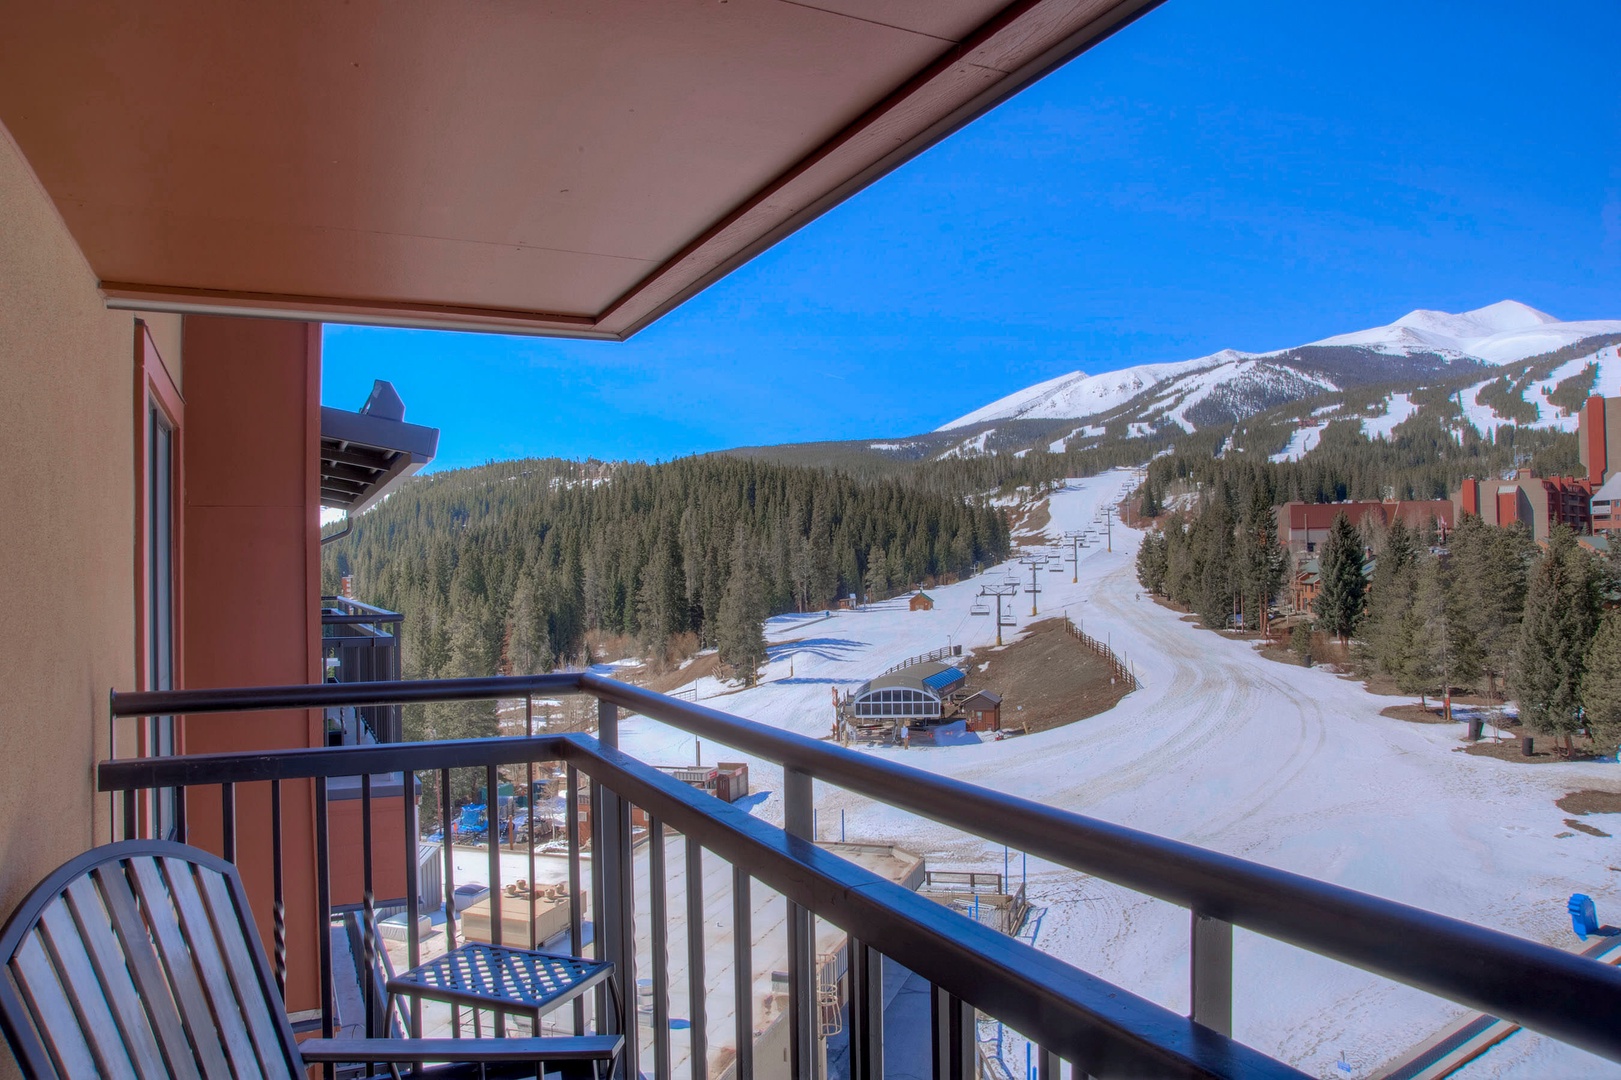 Ski resort view from the balcony!